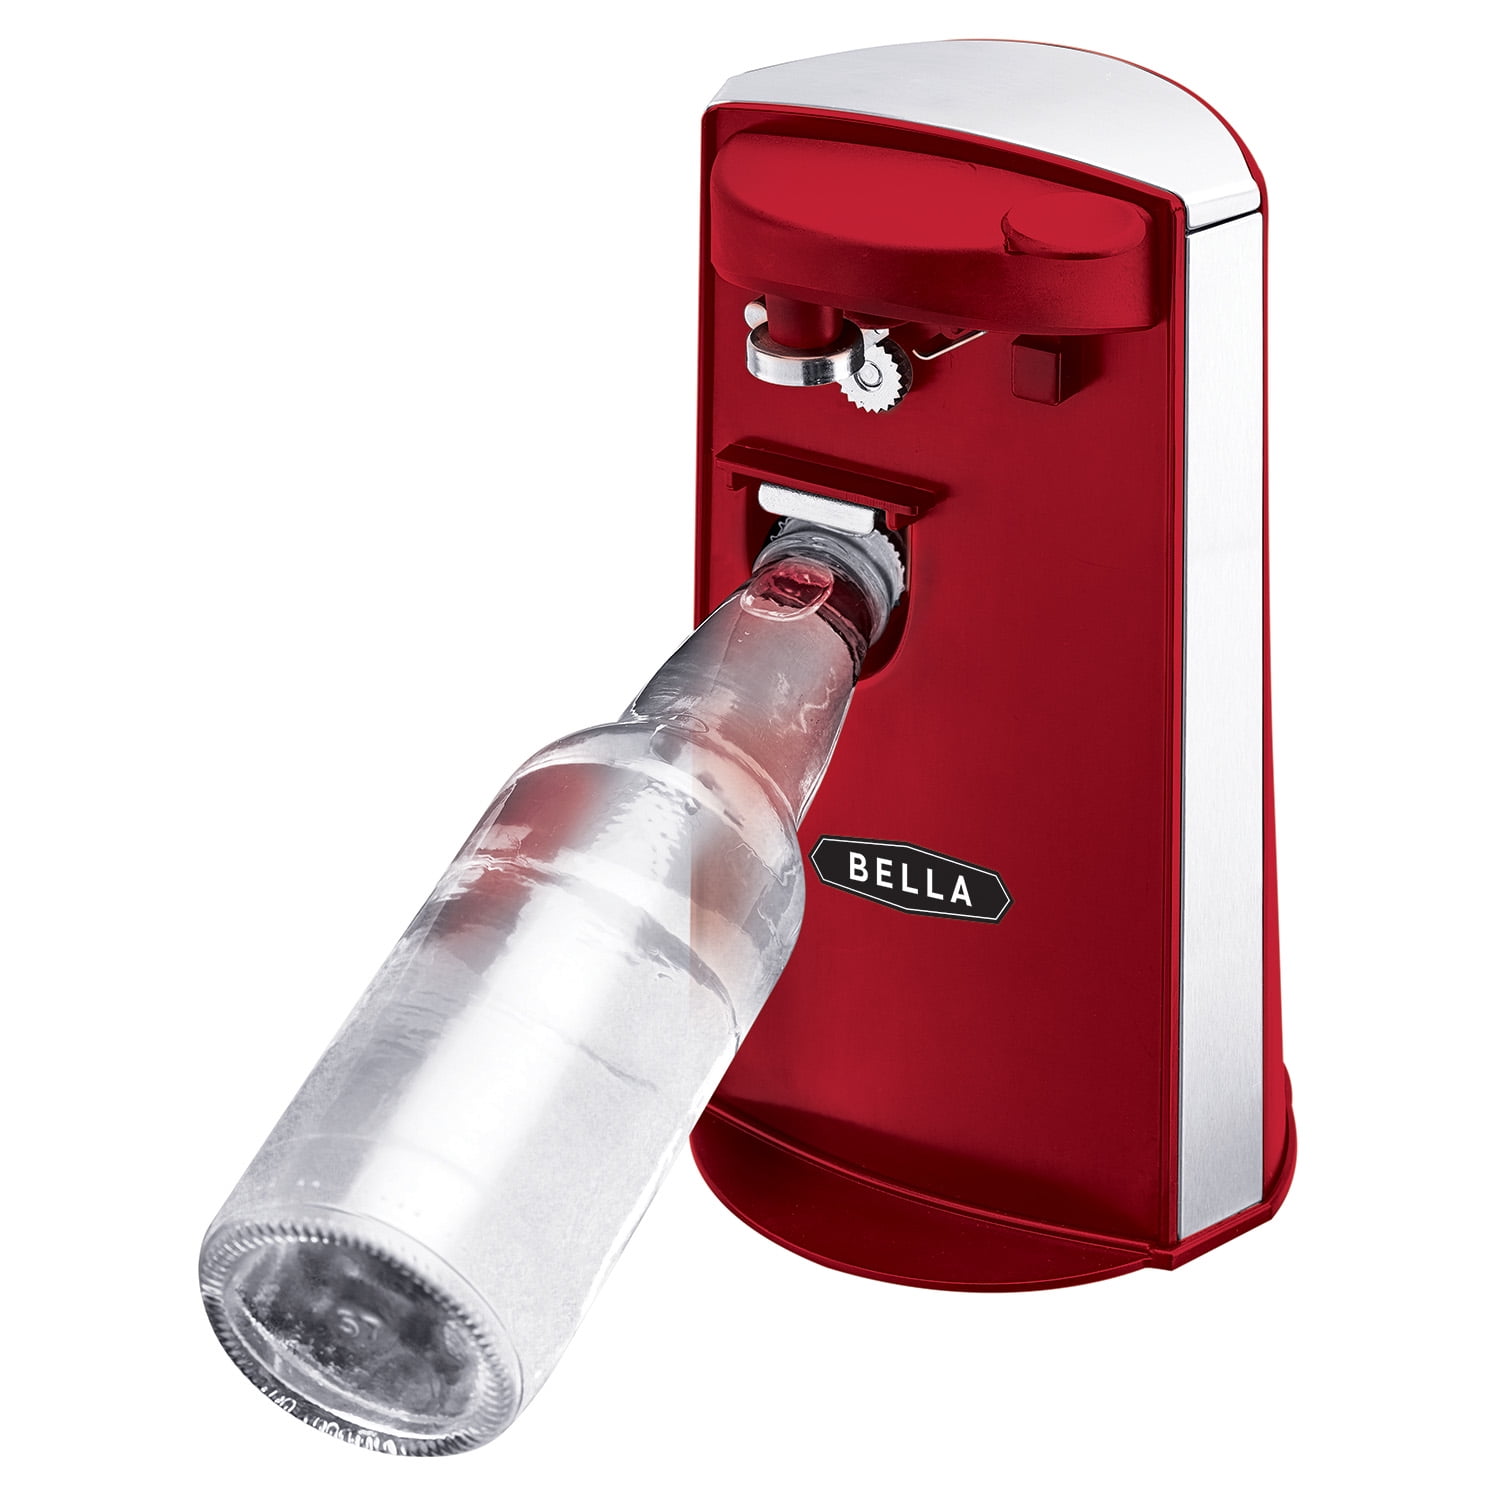 Bella Tall Electric Can Opener Knife Sharpener Bottle Opener New